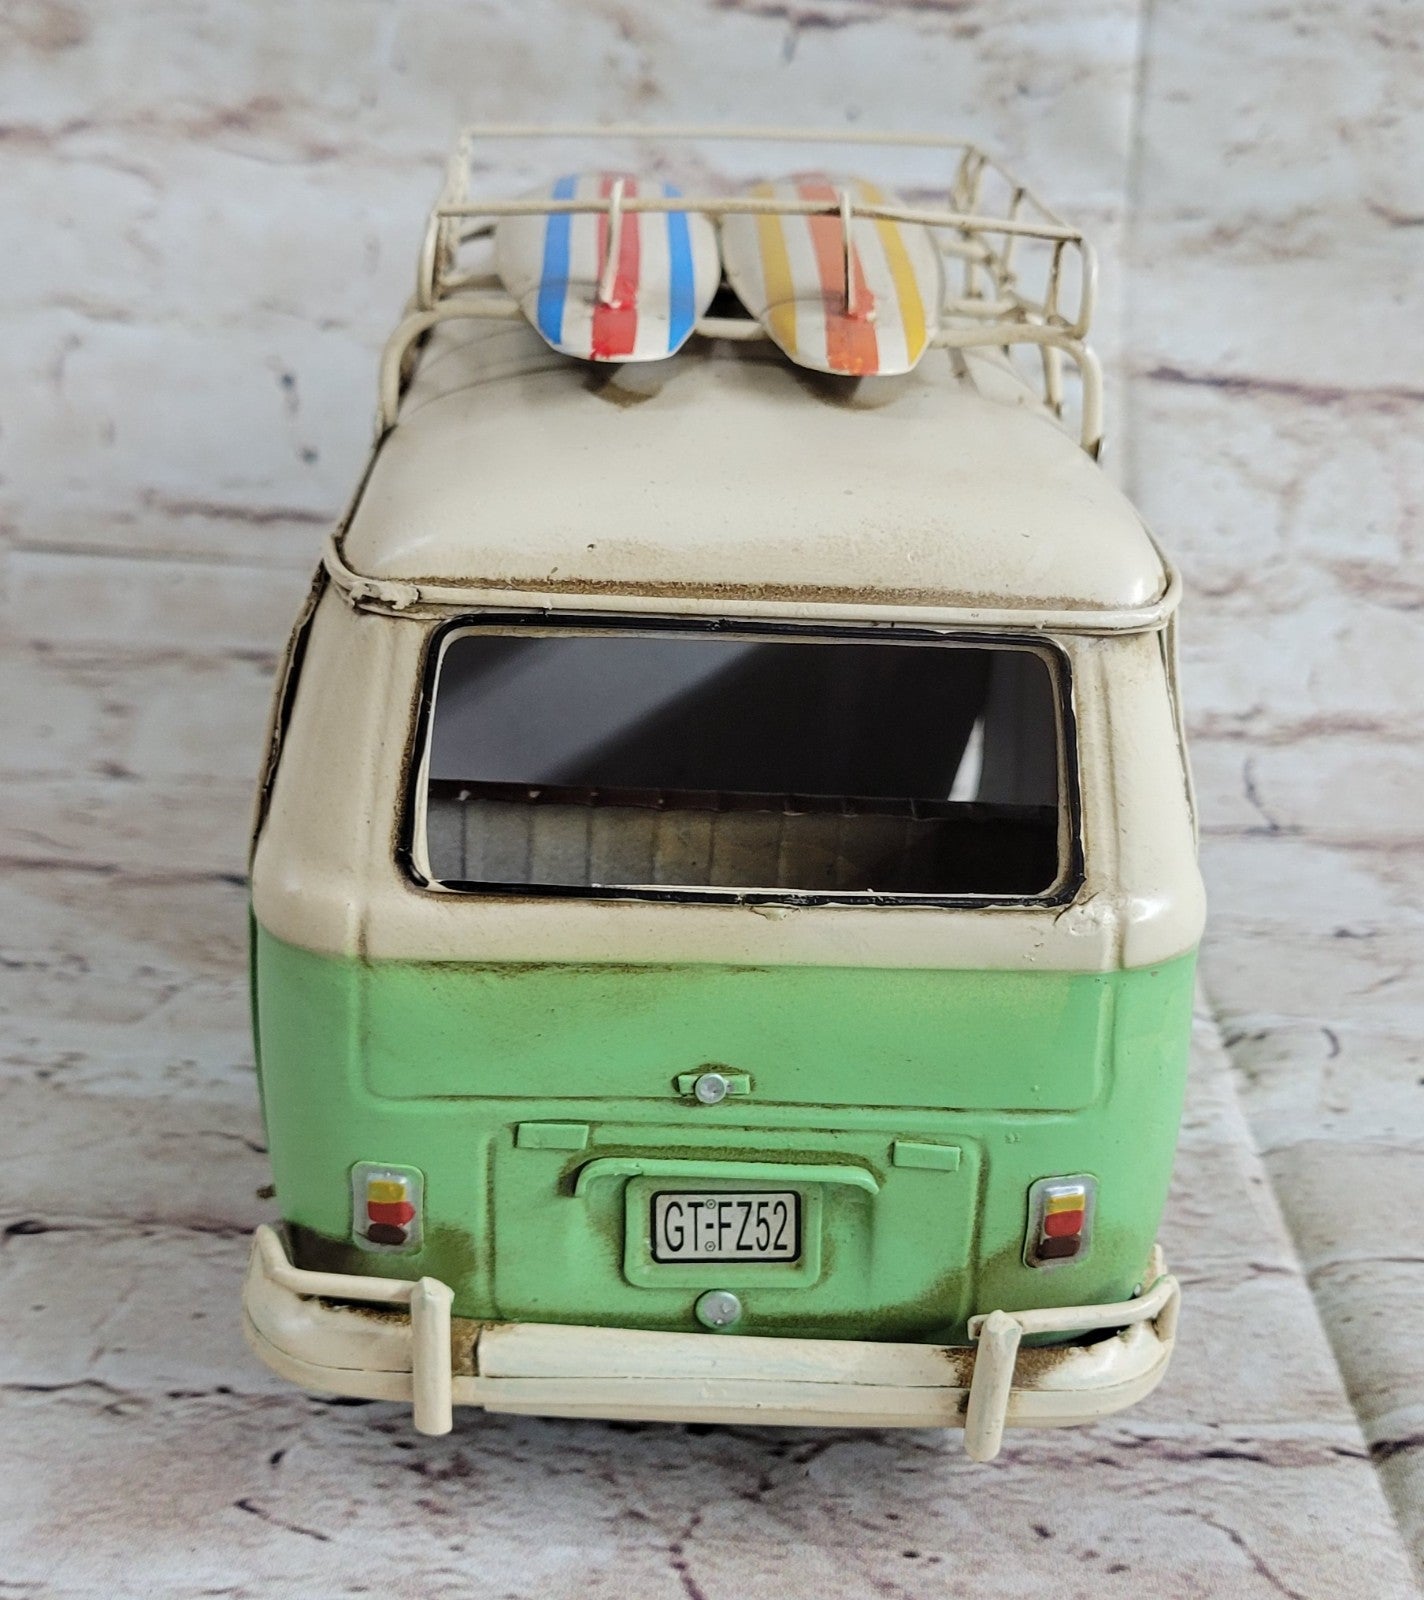 Collectible Collector Edition 1966 Volkswagen Mini Bus Tinplate Metal Artwork